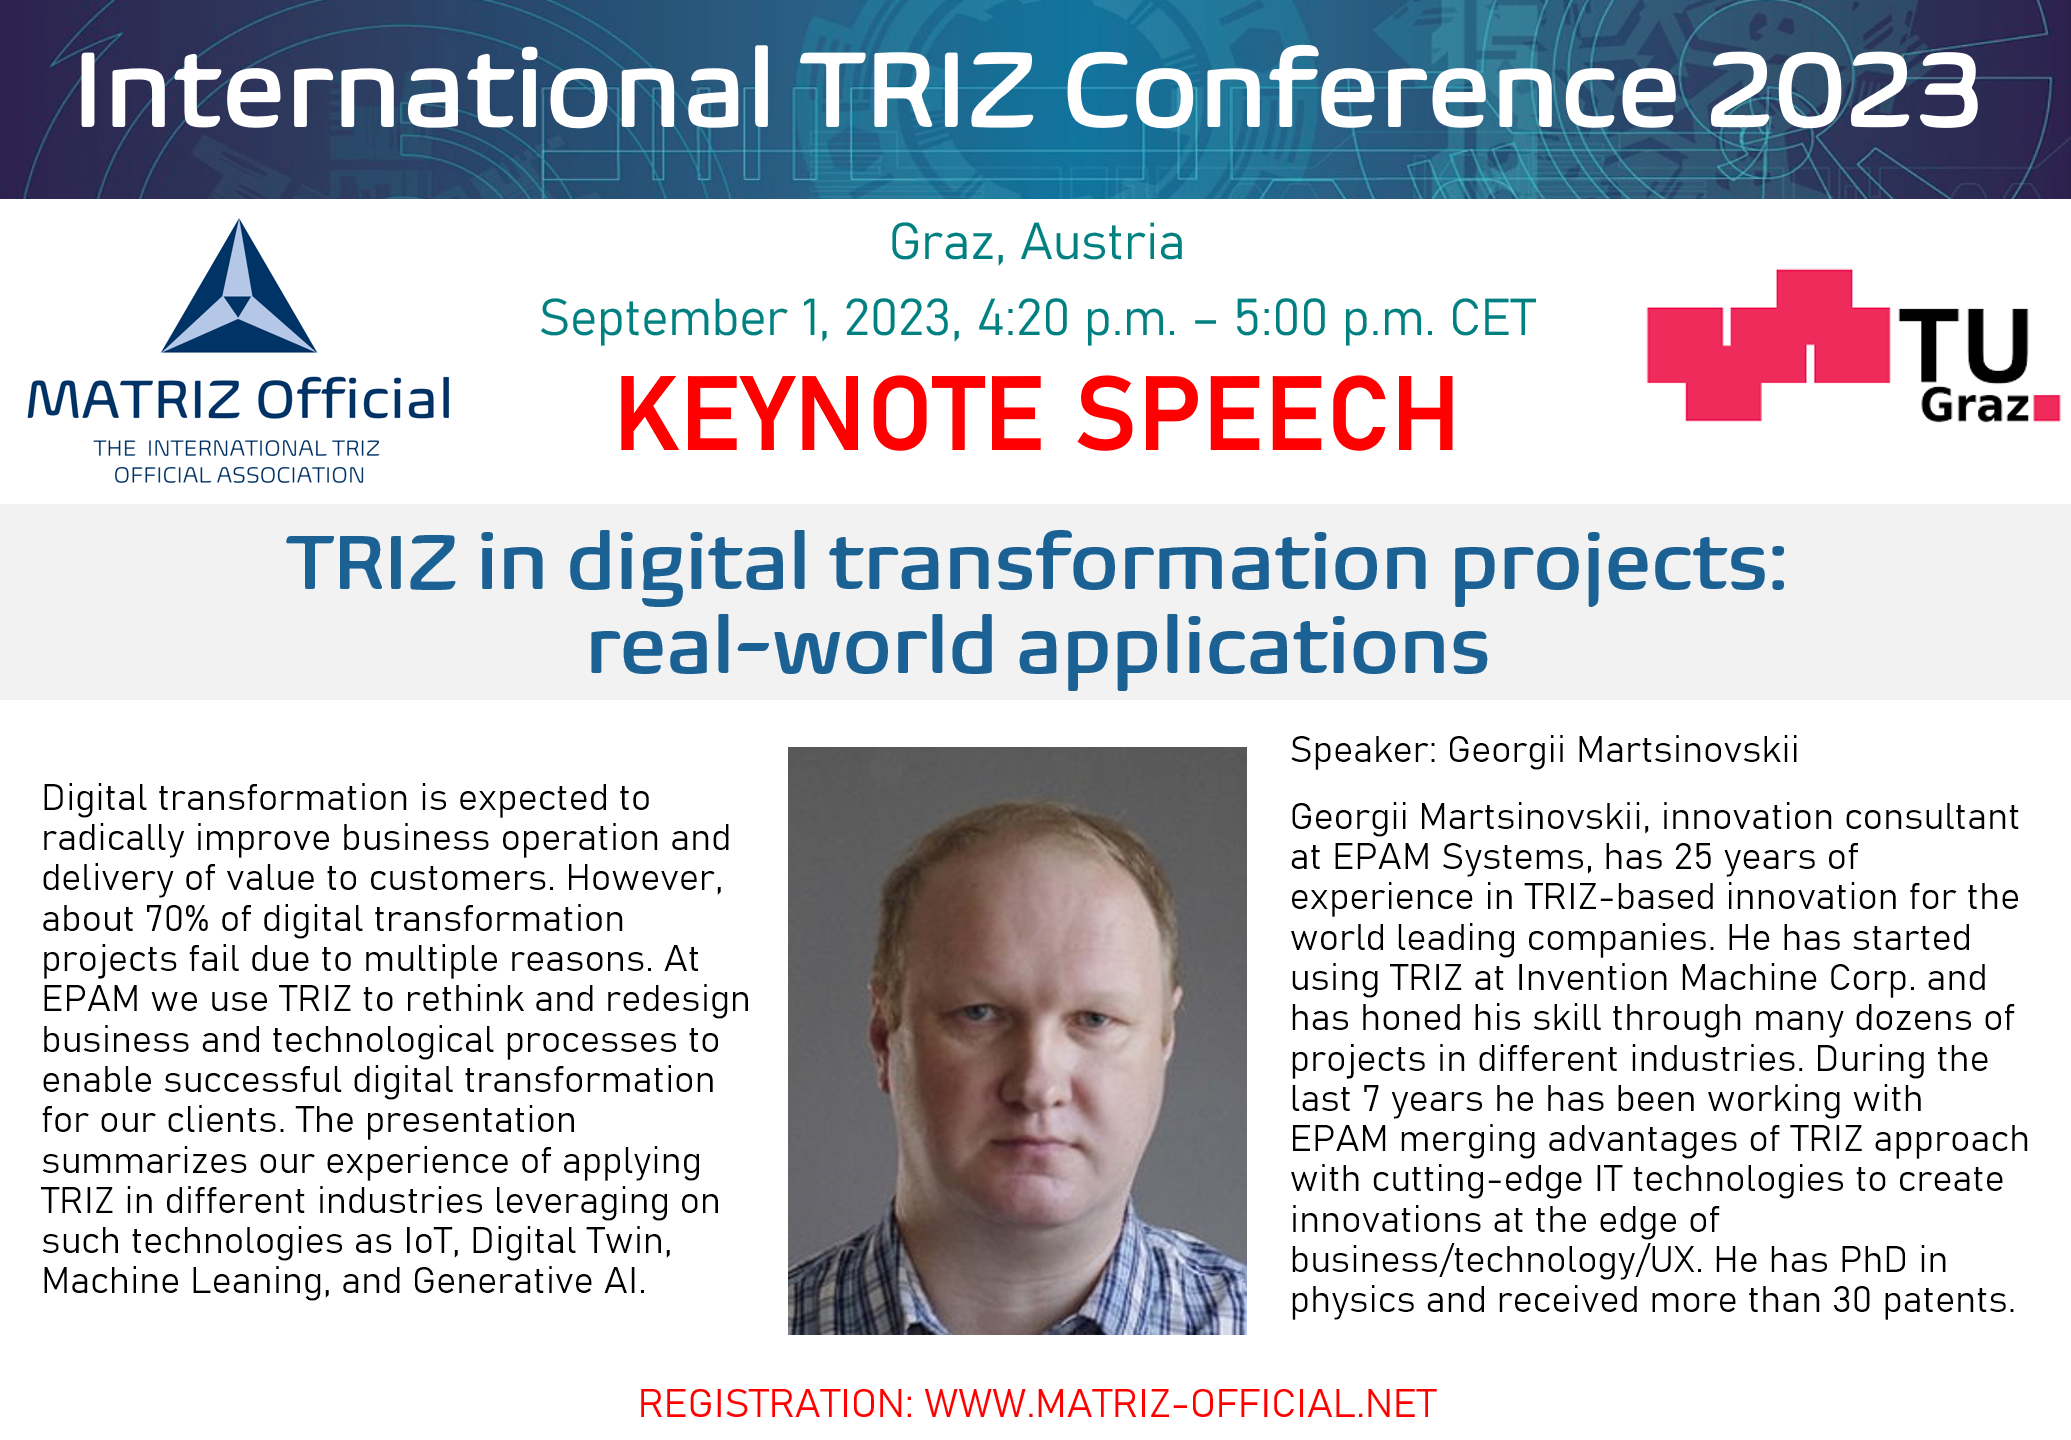 PowerPoint Slide Show ITC 2023 Keynote speech George Martsinovskii v3 final versionpptx Read Only 23 06 2023 09 32 42